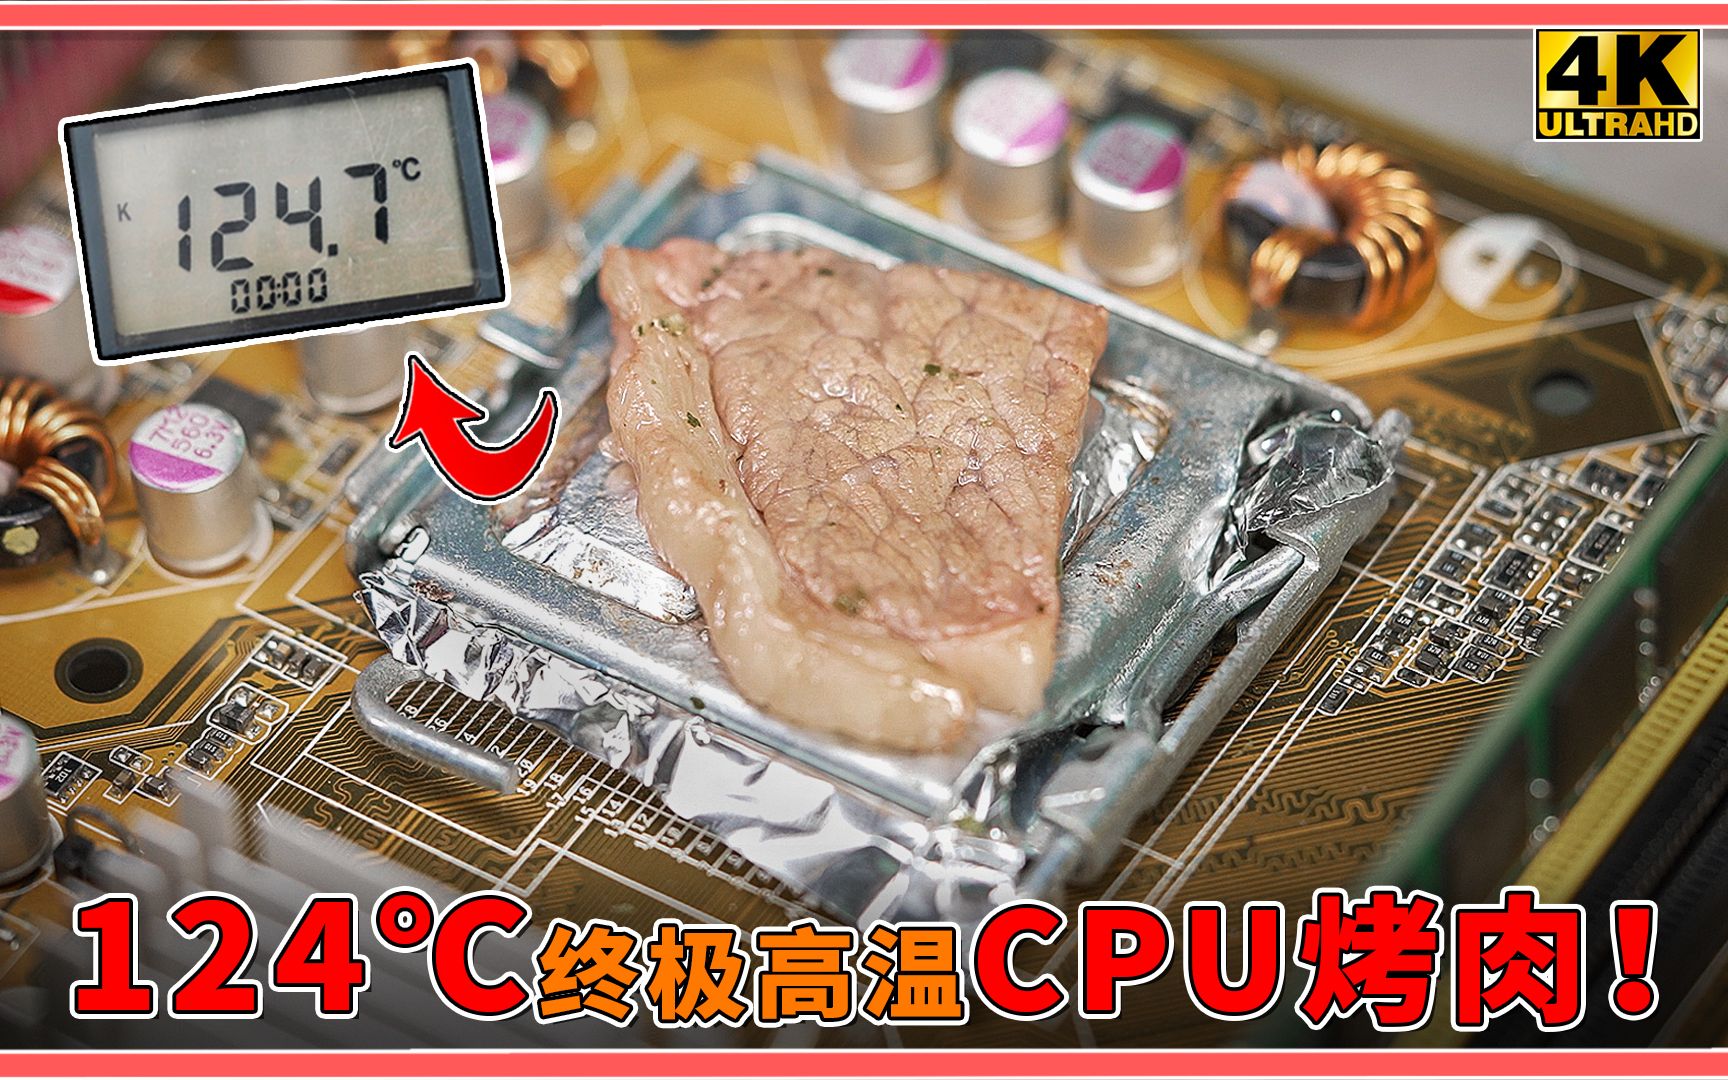 CPU烤肉/显卡铁板烧！124℃高温烹饪干净又卫生，直接做个六菜一汤！【科技达】